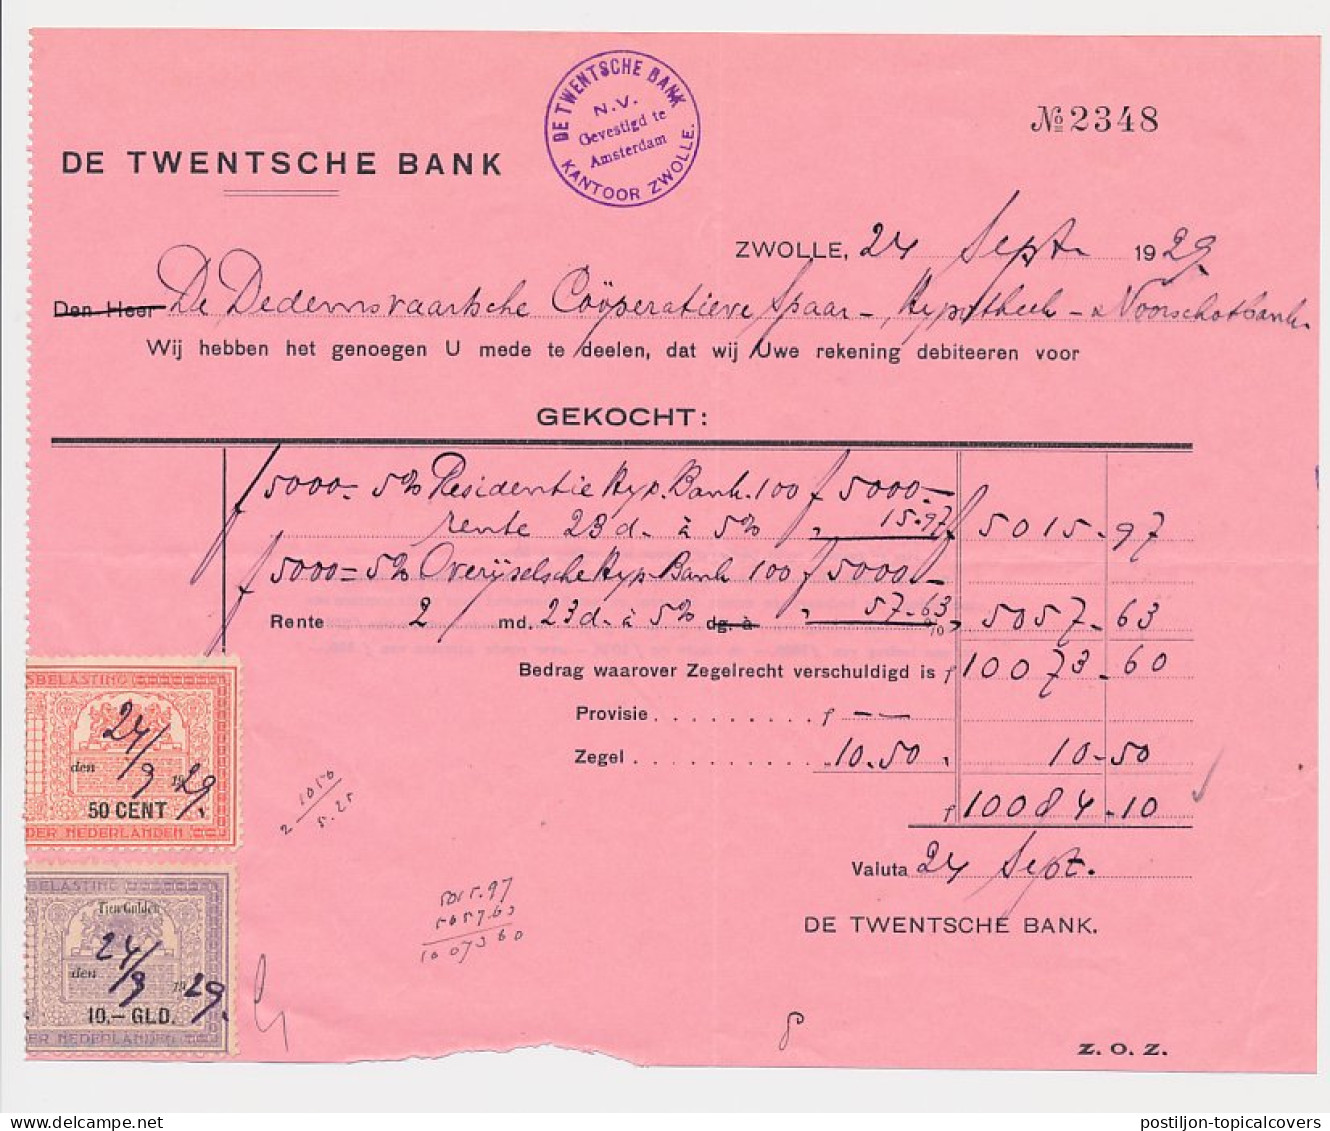 Beursbelasting 50 CENT / 10.- GLD. Den 19.. - Zwolle 1930 - Revenue Stamps